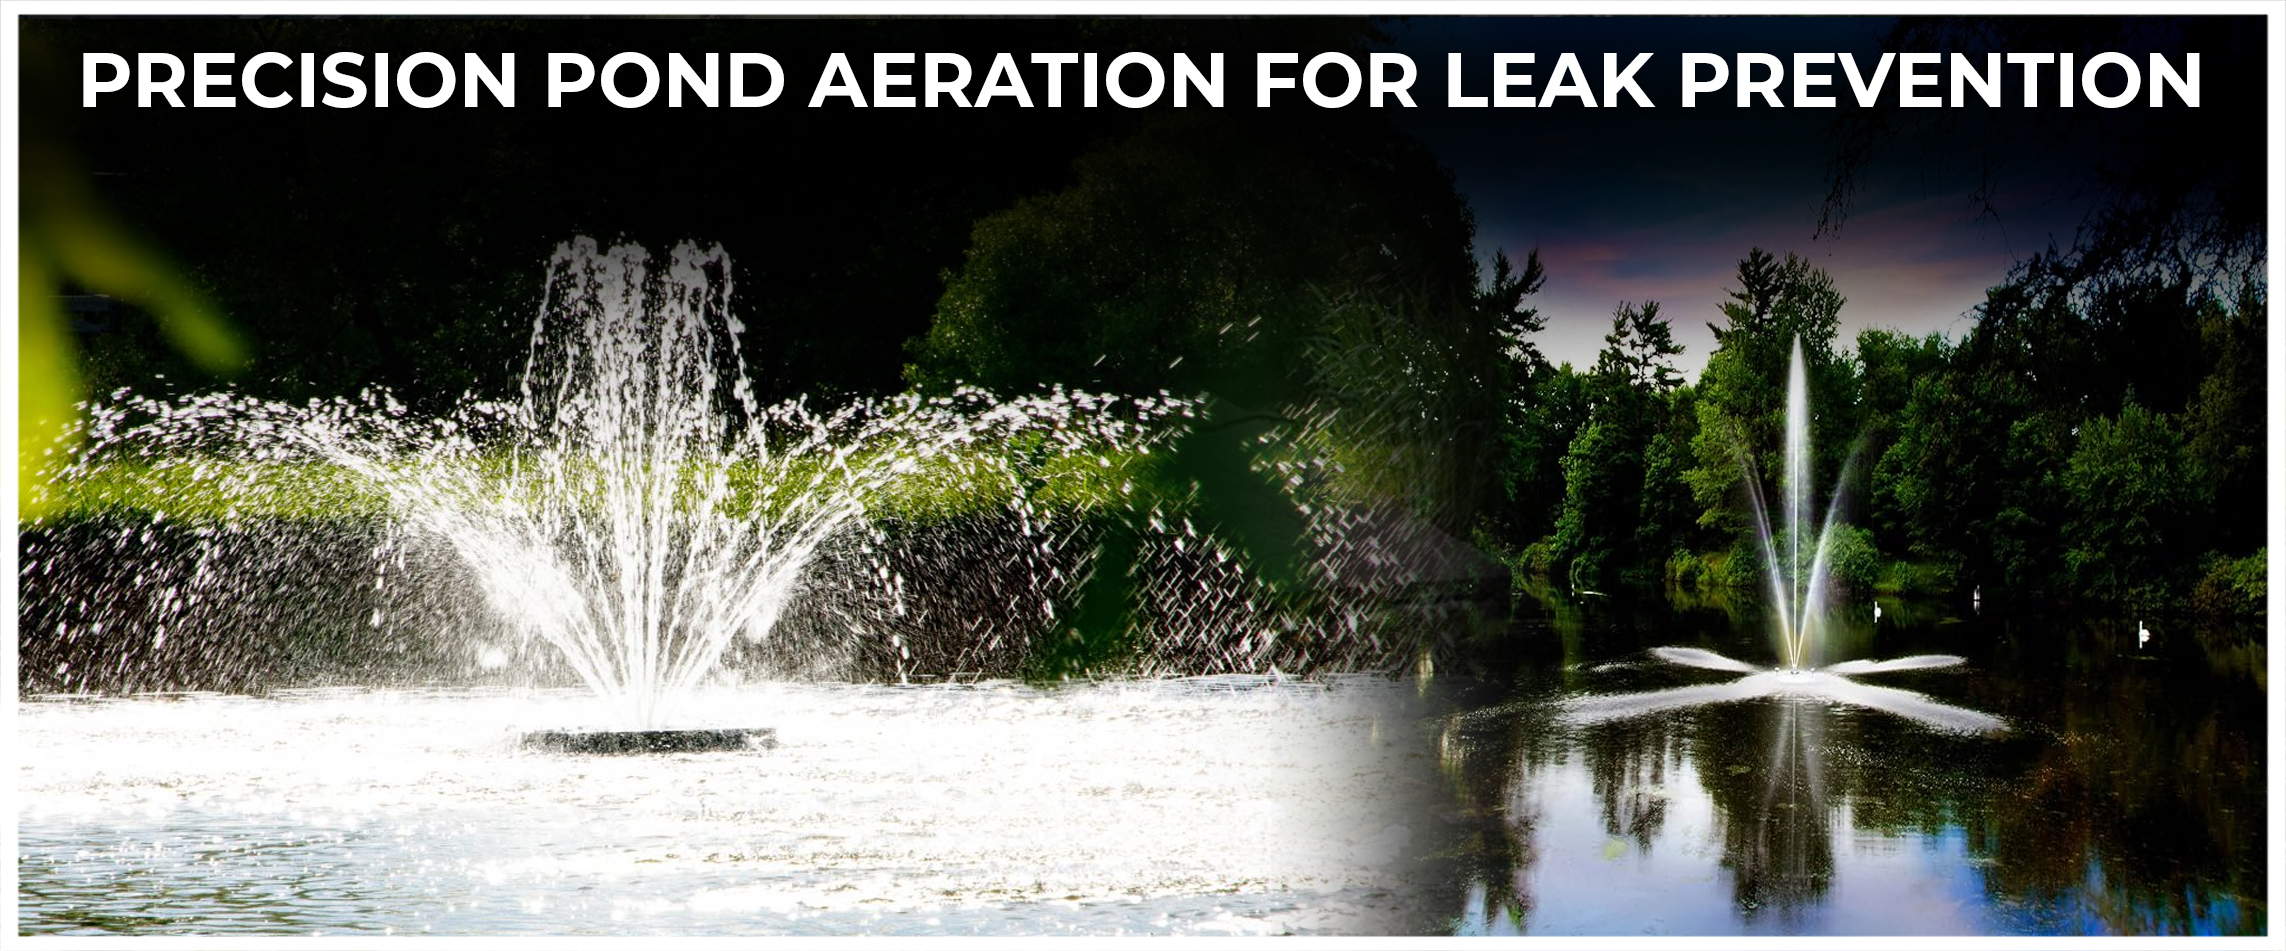  Precision Pond Aeration for Leak Prevention